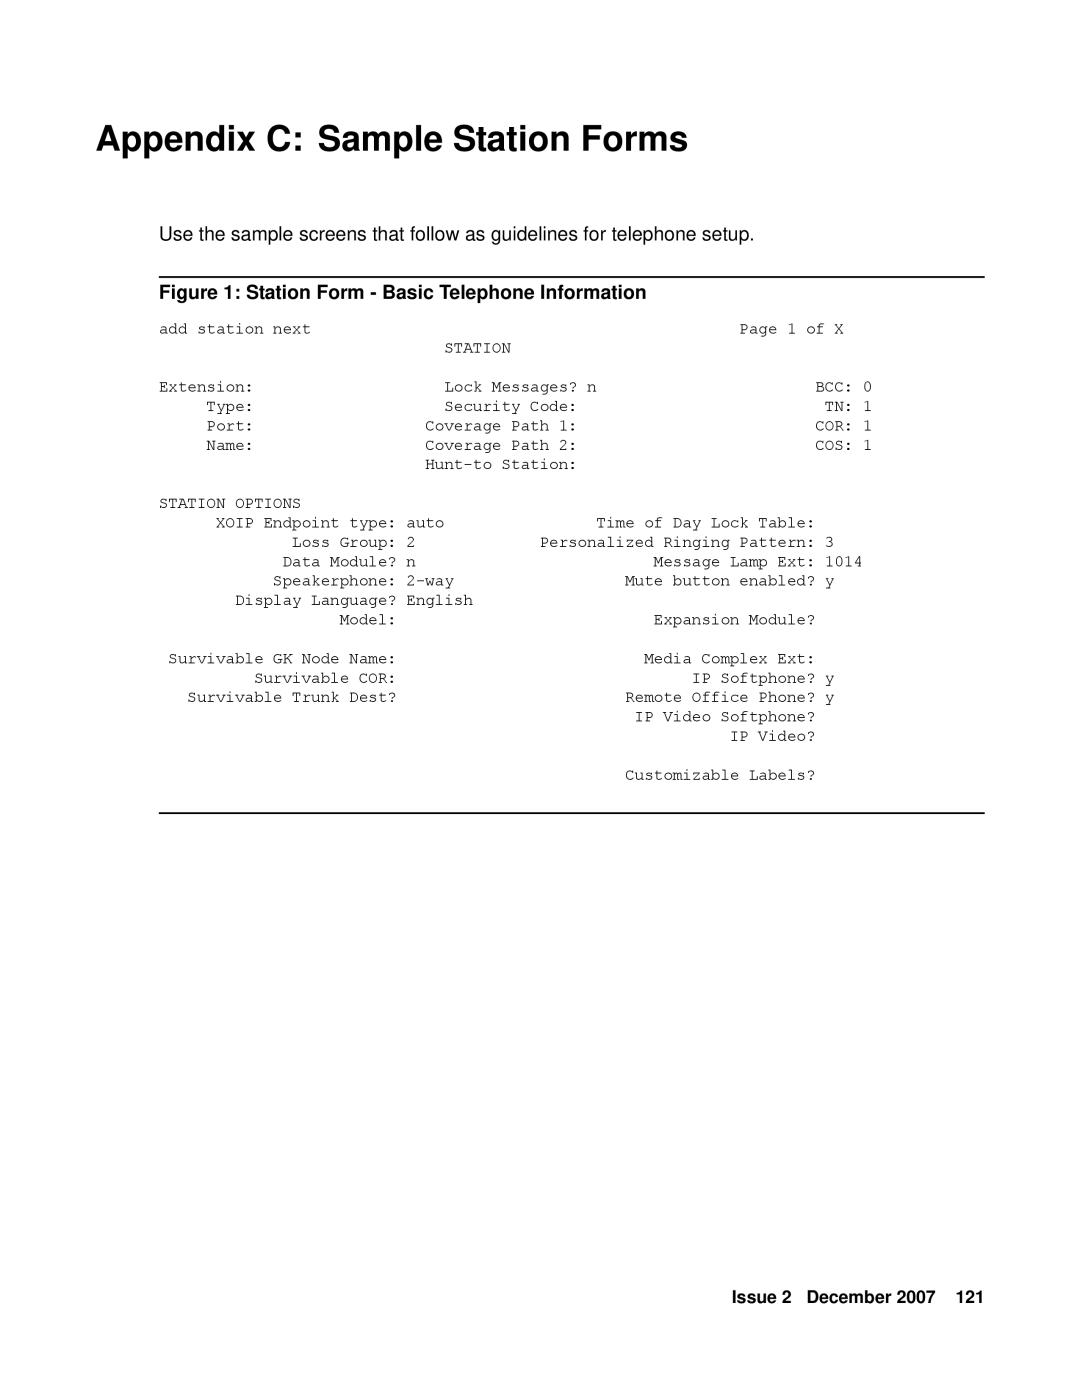 Avaya 9600 manual Appendix C Sample Station Forms, Station Options 